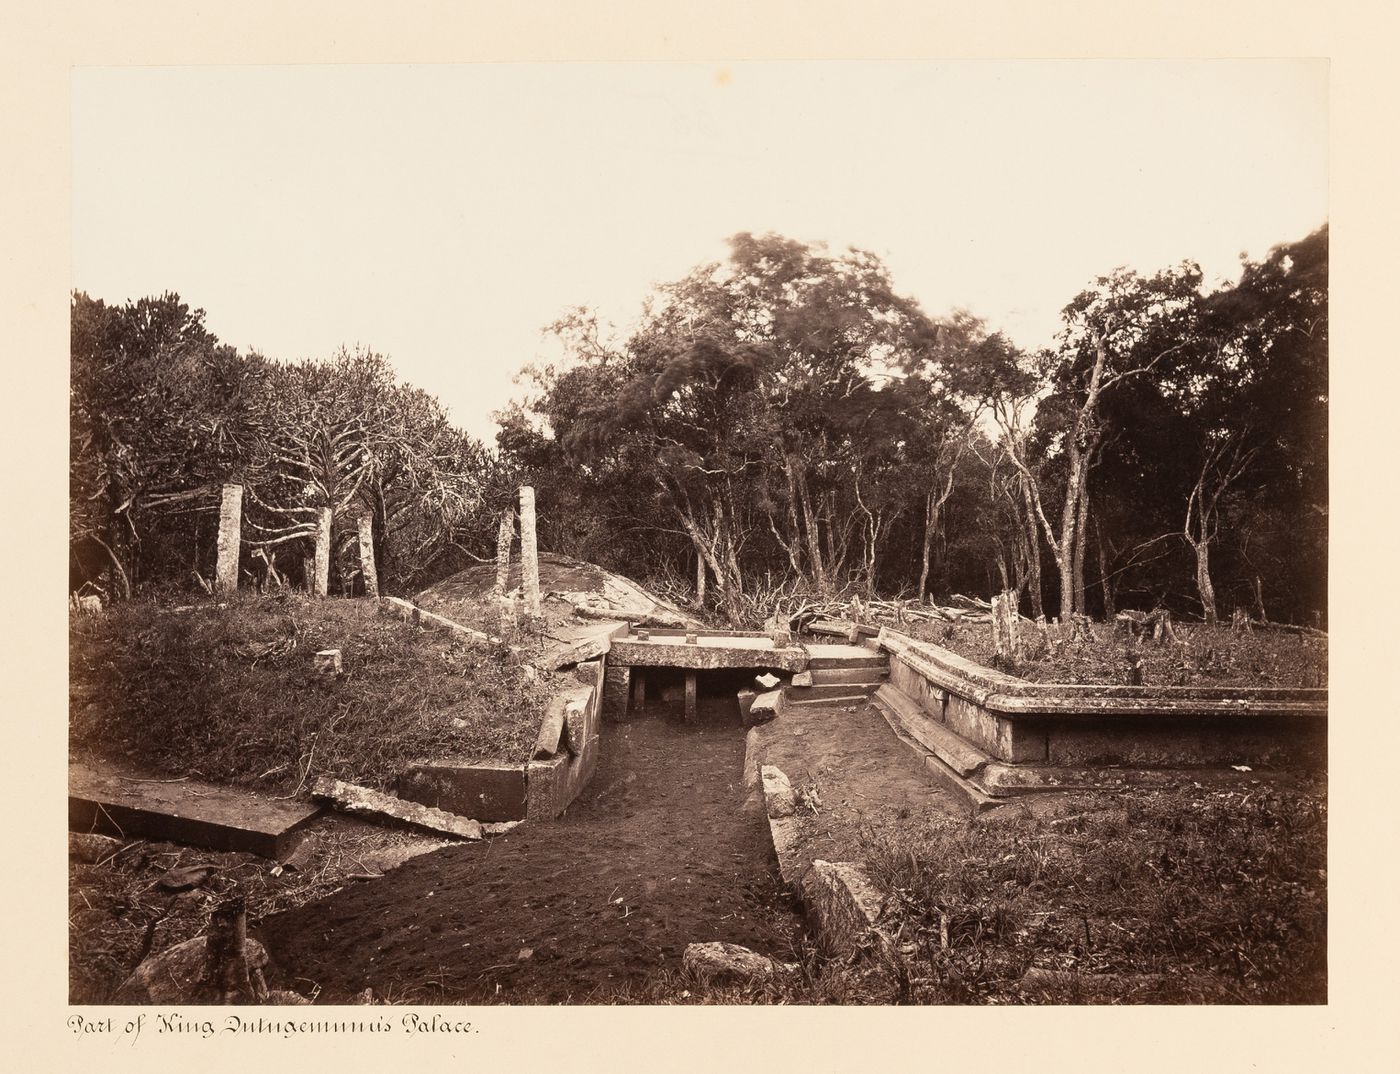 View of pavilions and a stone platform, King Mahasen's Palace, Anuradhapura, Ceylon (now Sri Lanka)